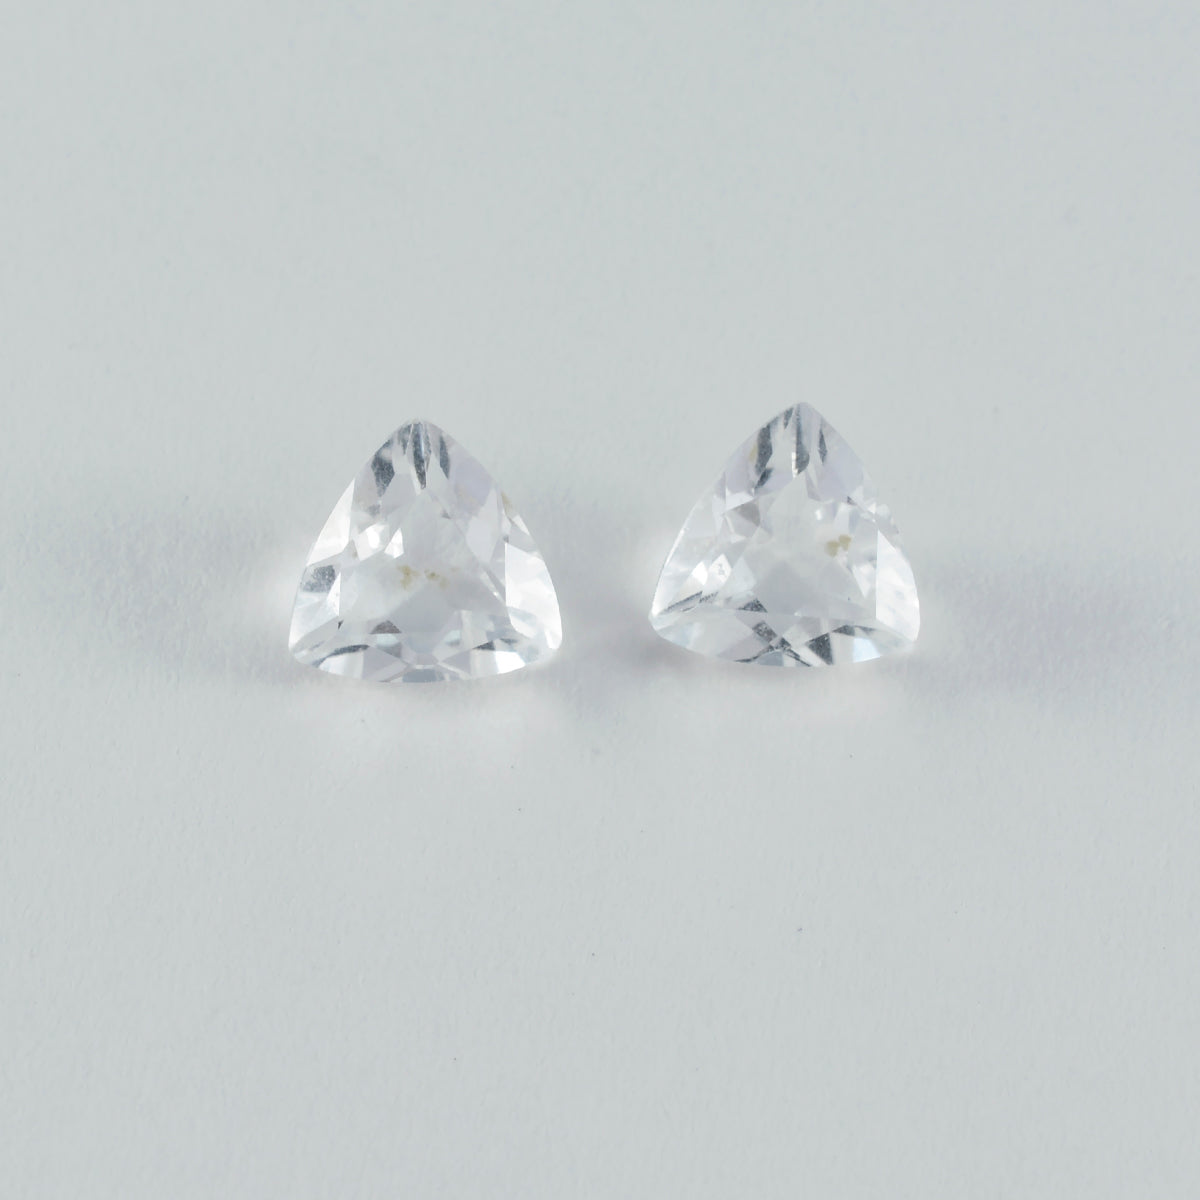 riyogems 1шт белый кристалл кварца ограненный 15х15 мм форма триллион а+ качество драгоценный камень